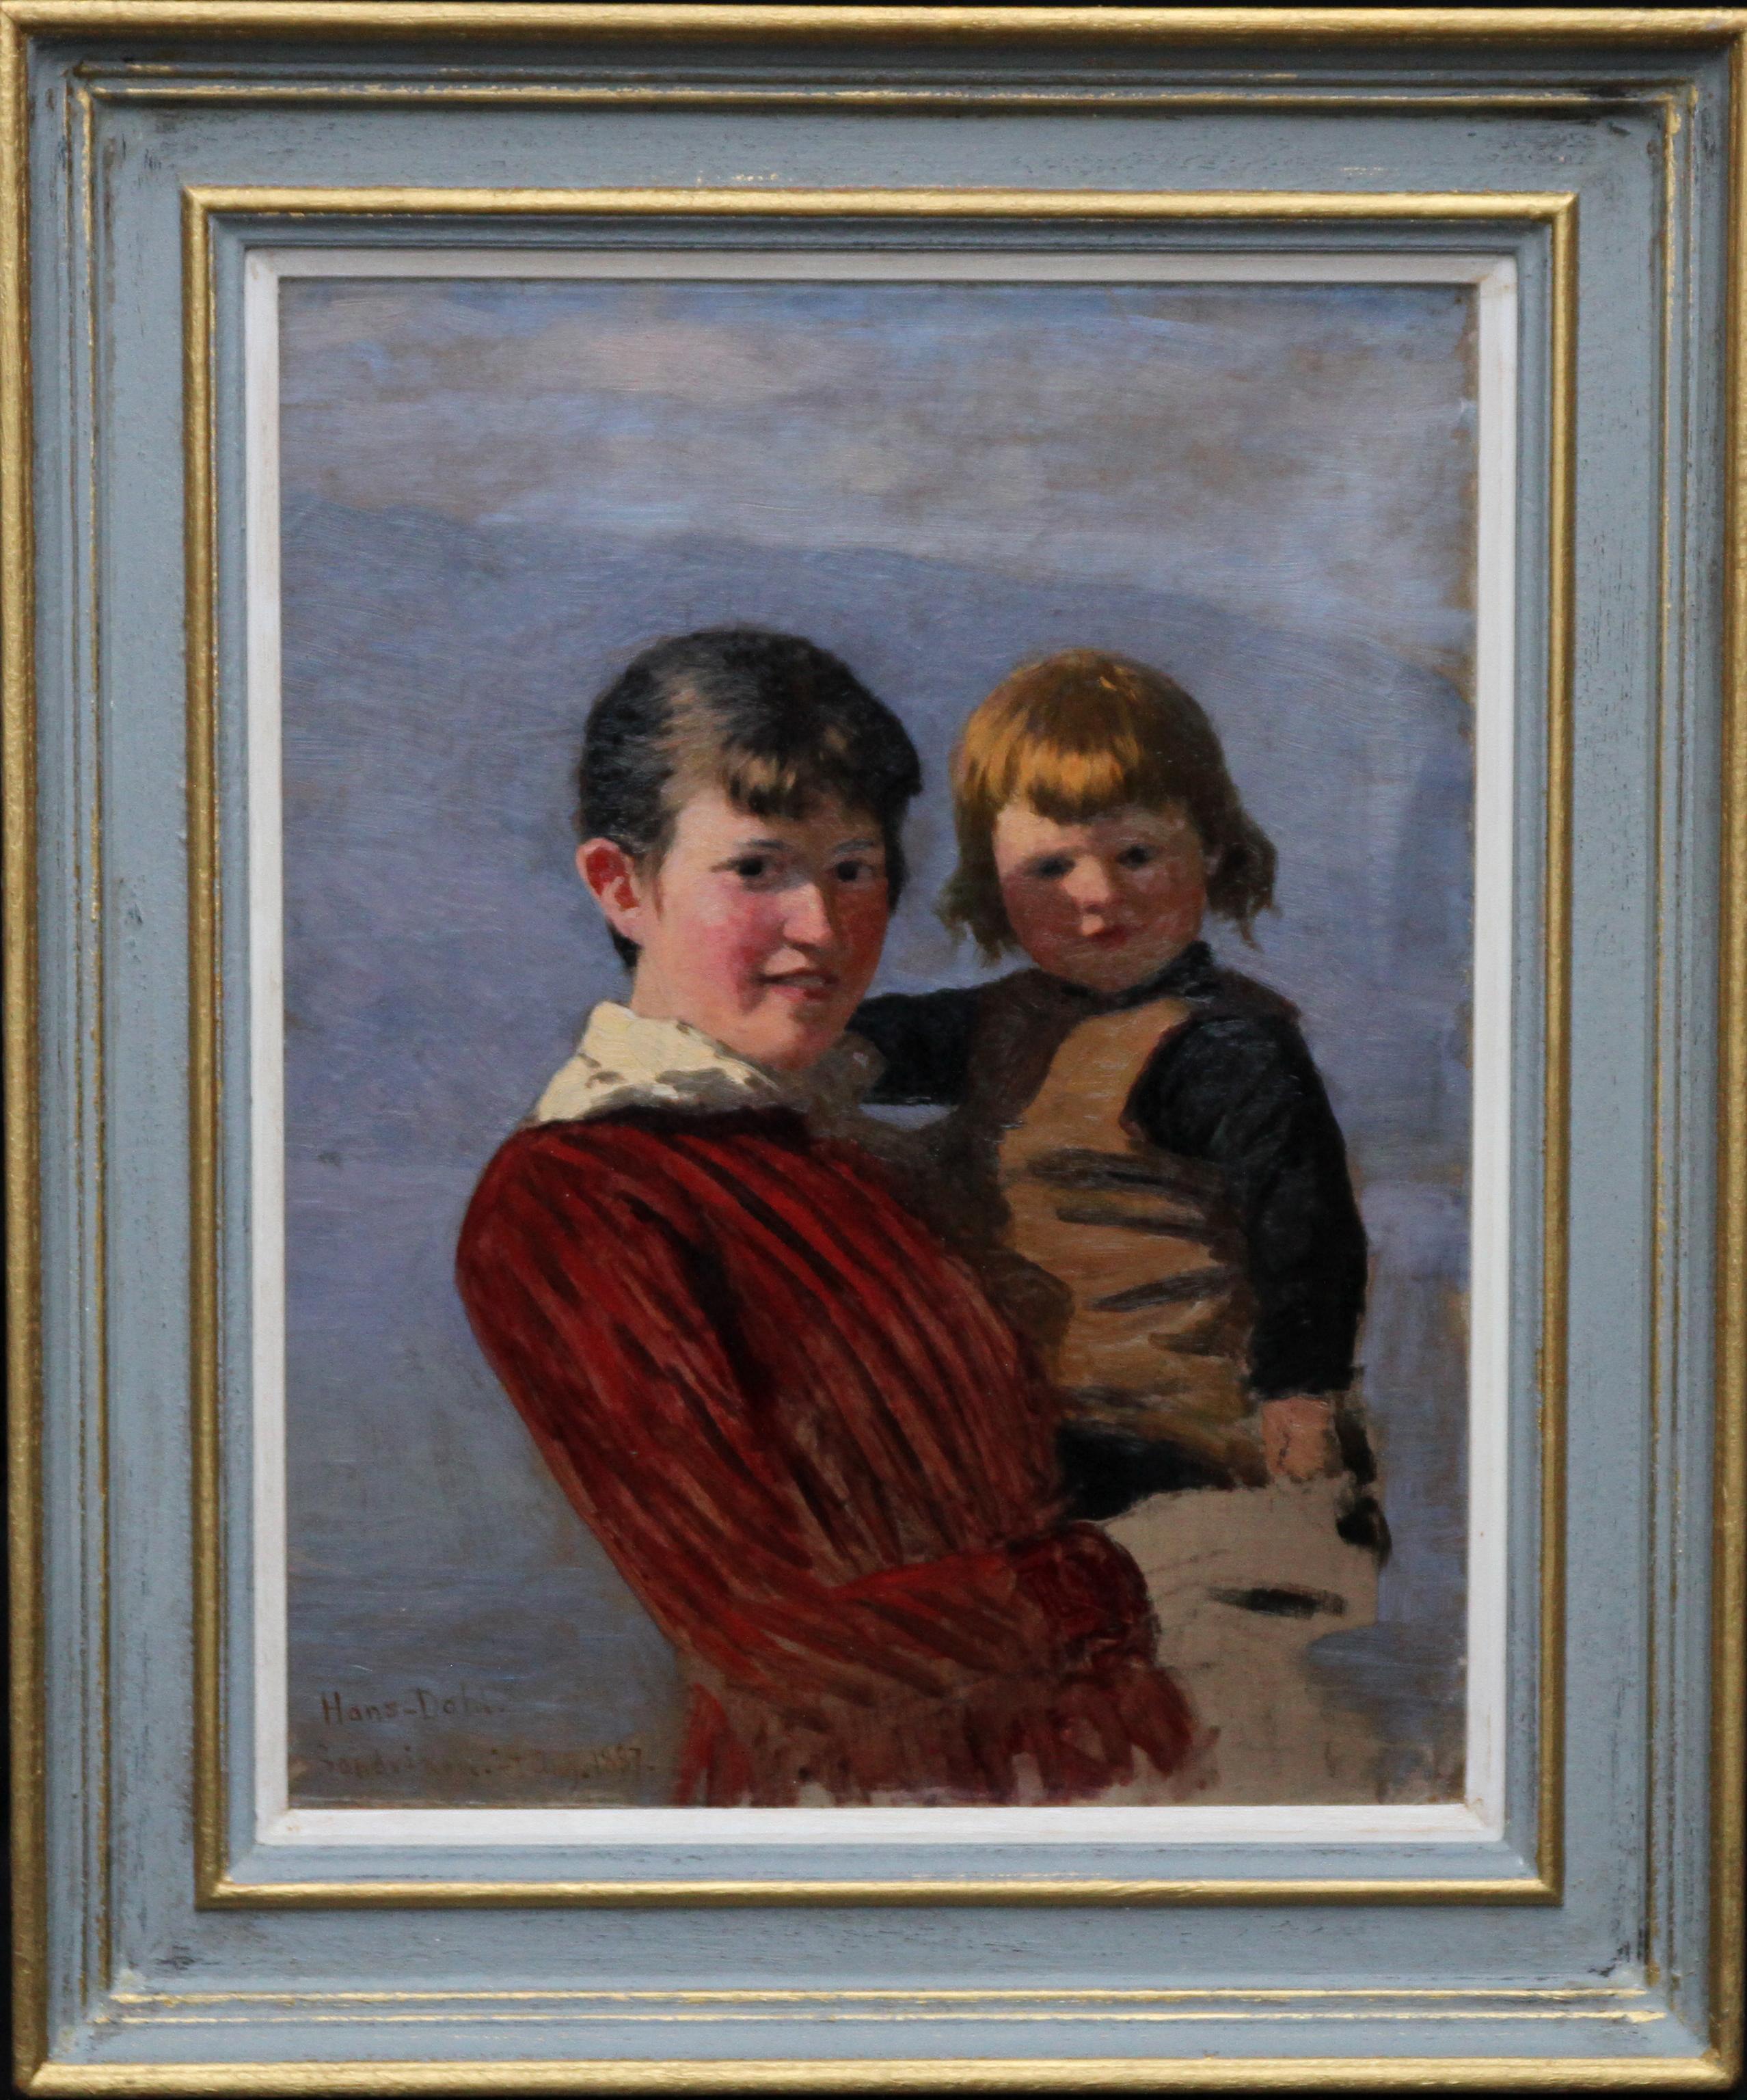 Hans Dahl Portrait Painting - Portrait of Sisters - Norwegian art 19th century Impressionist oil painting